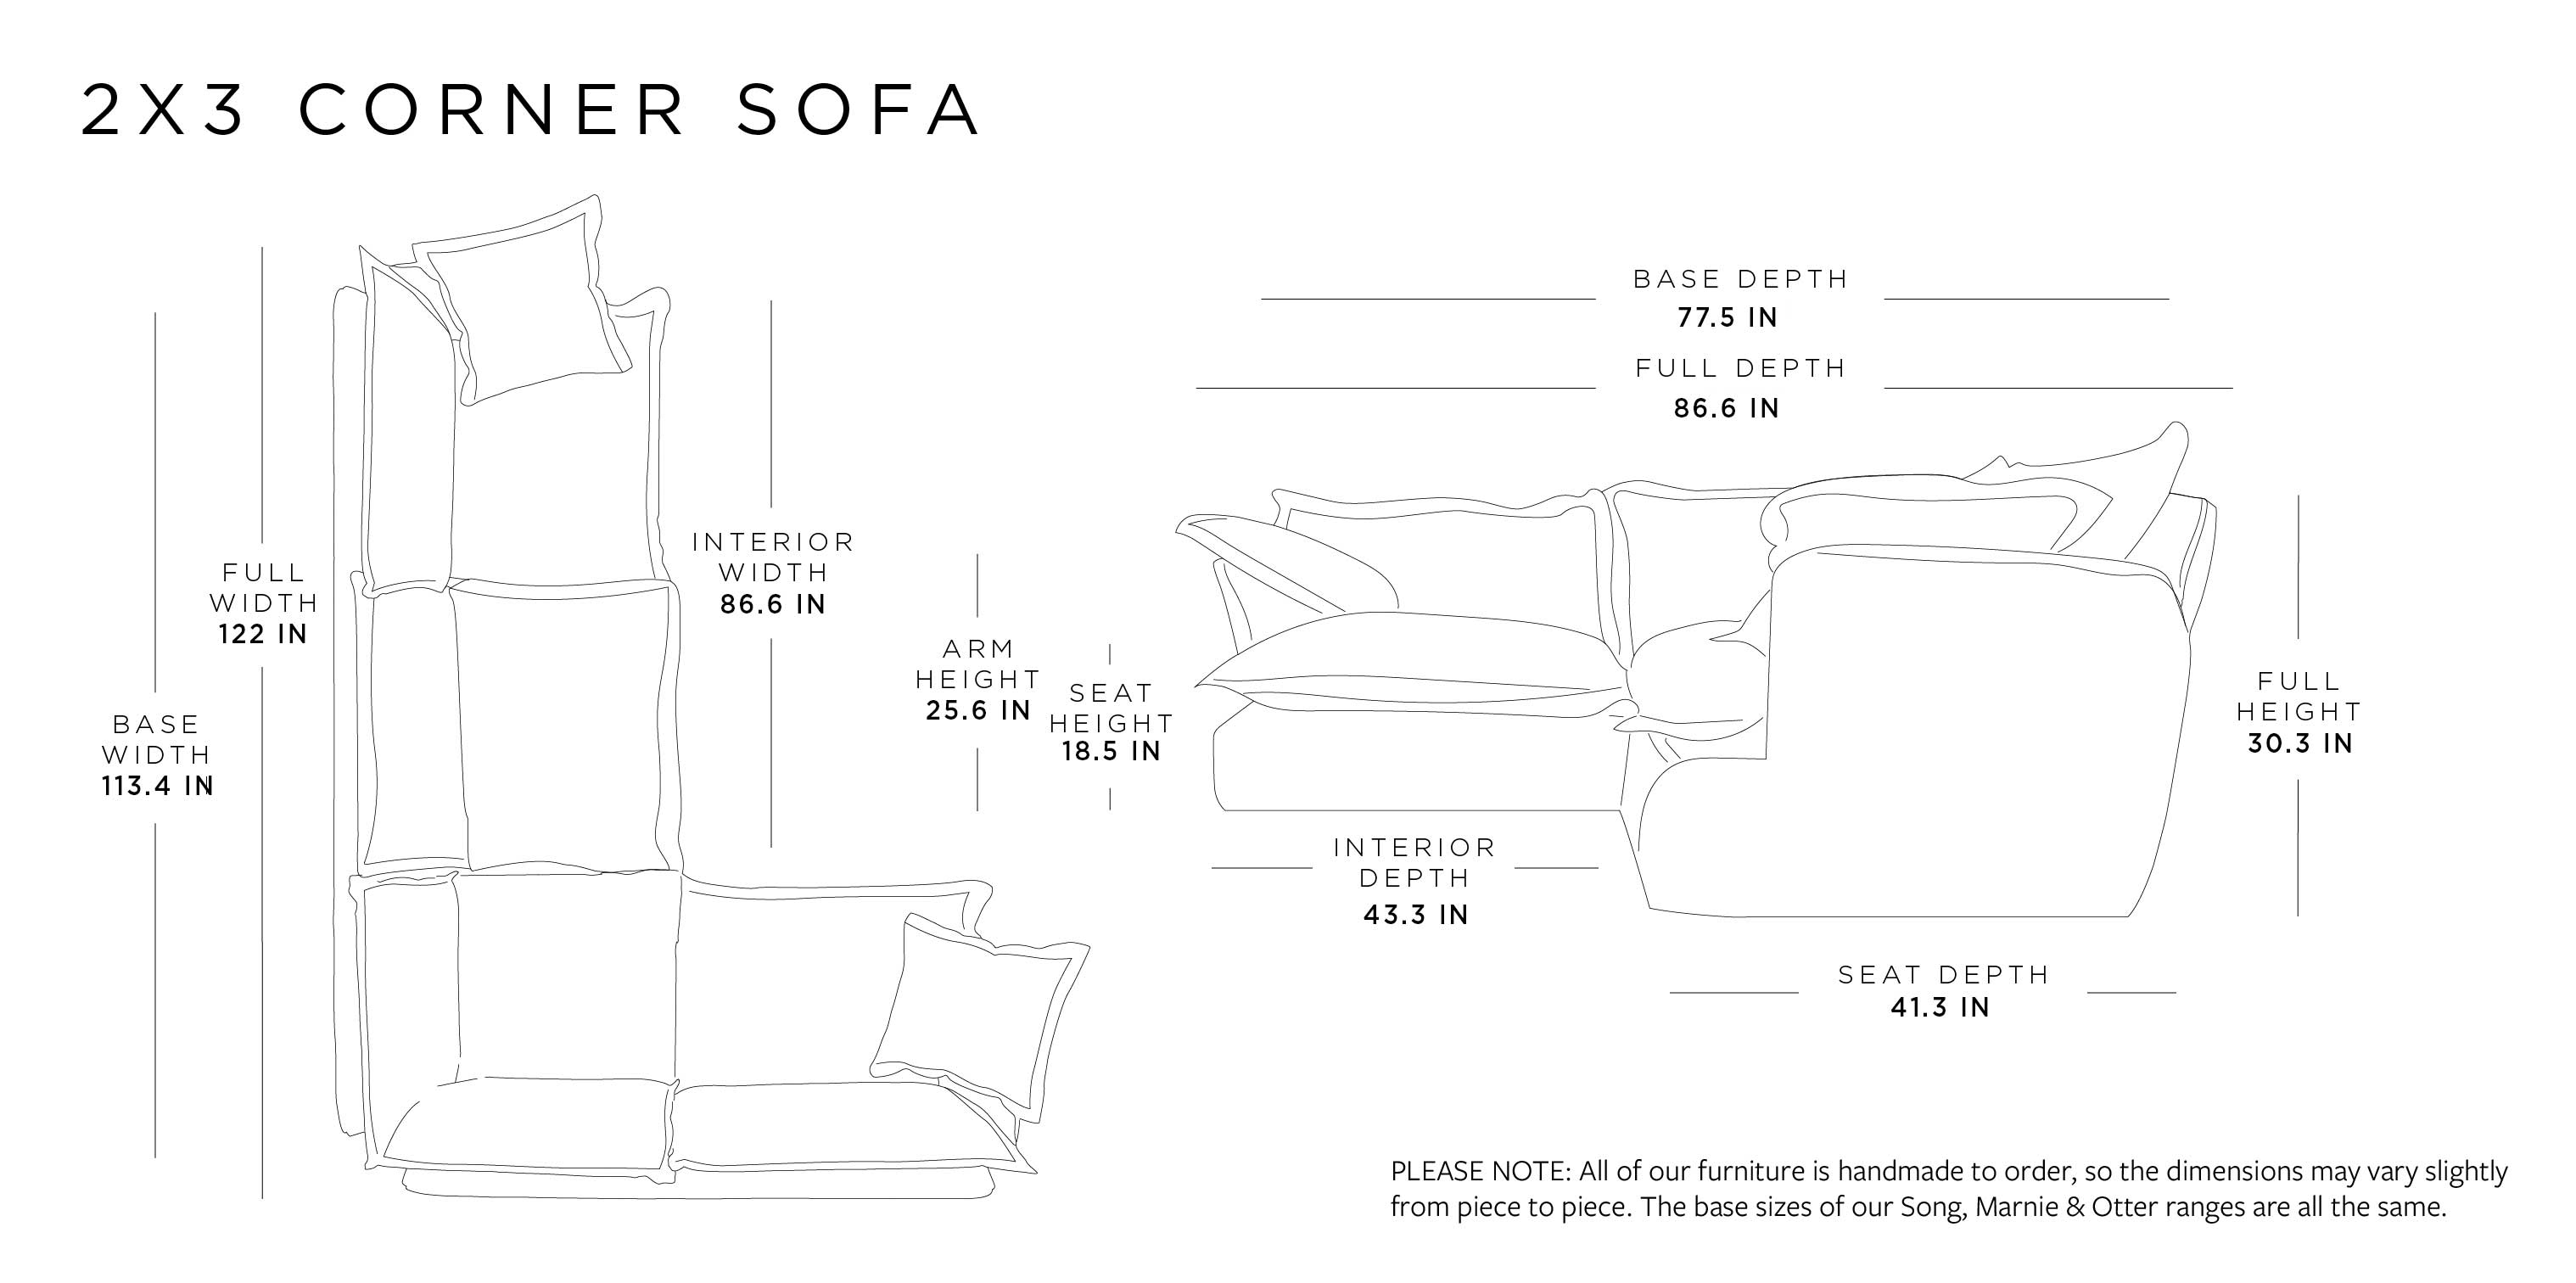 2x3 Corner Sofa | Song Range Size Guide